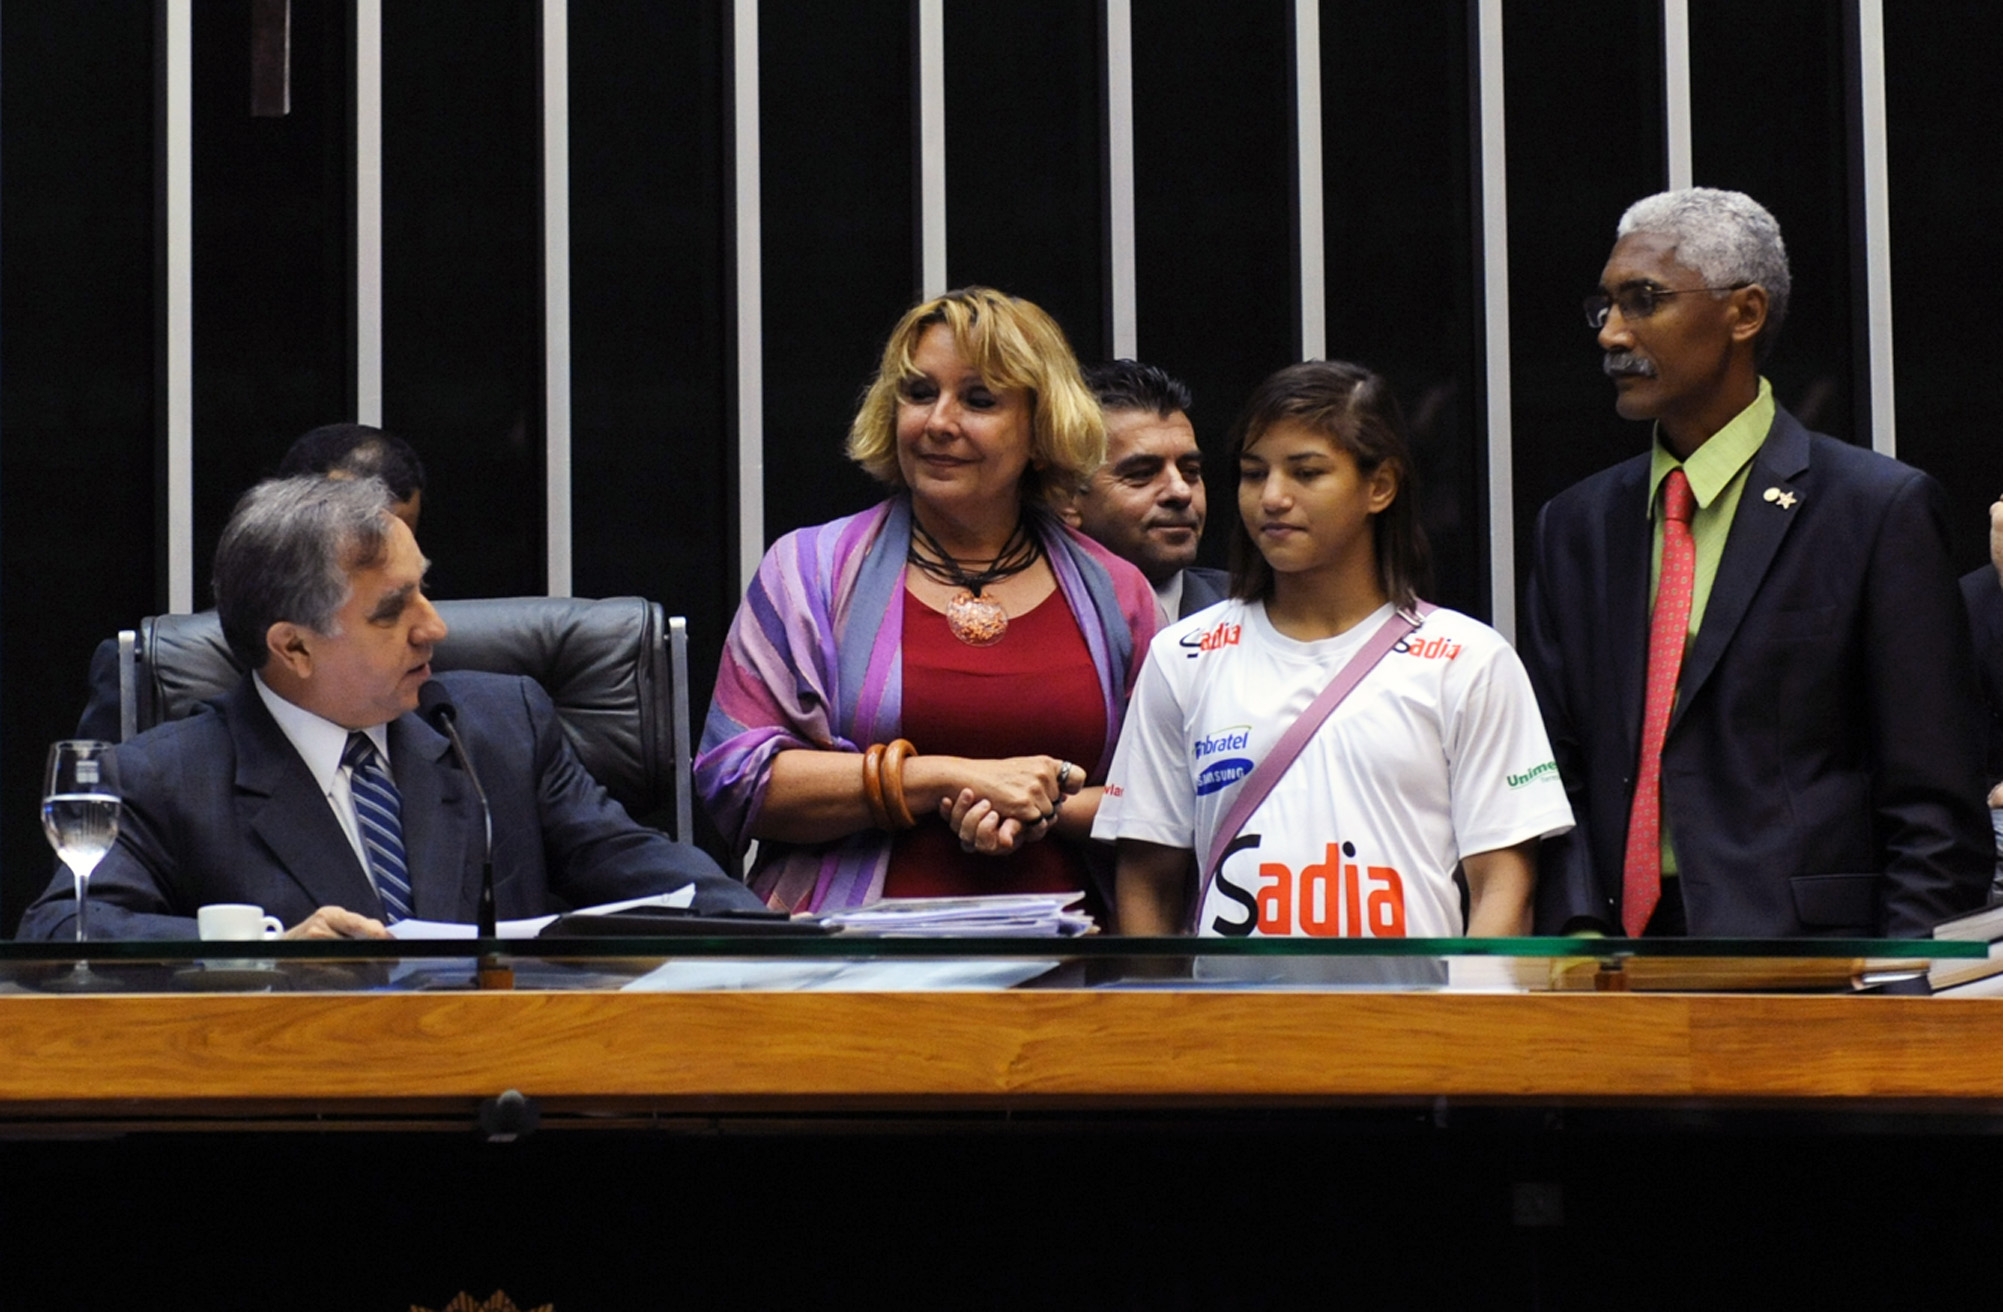 Medalhista Sarah Menezes visita a Câmara